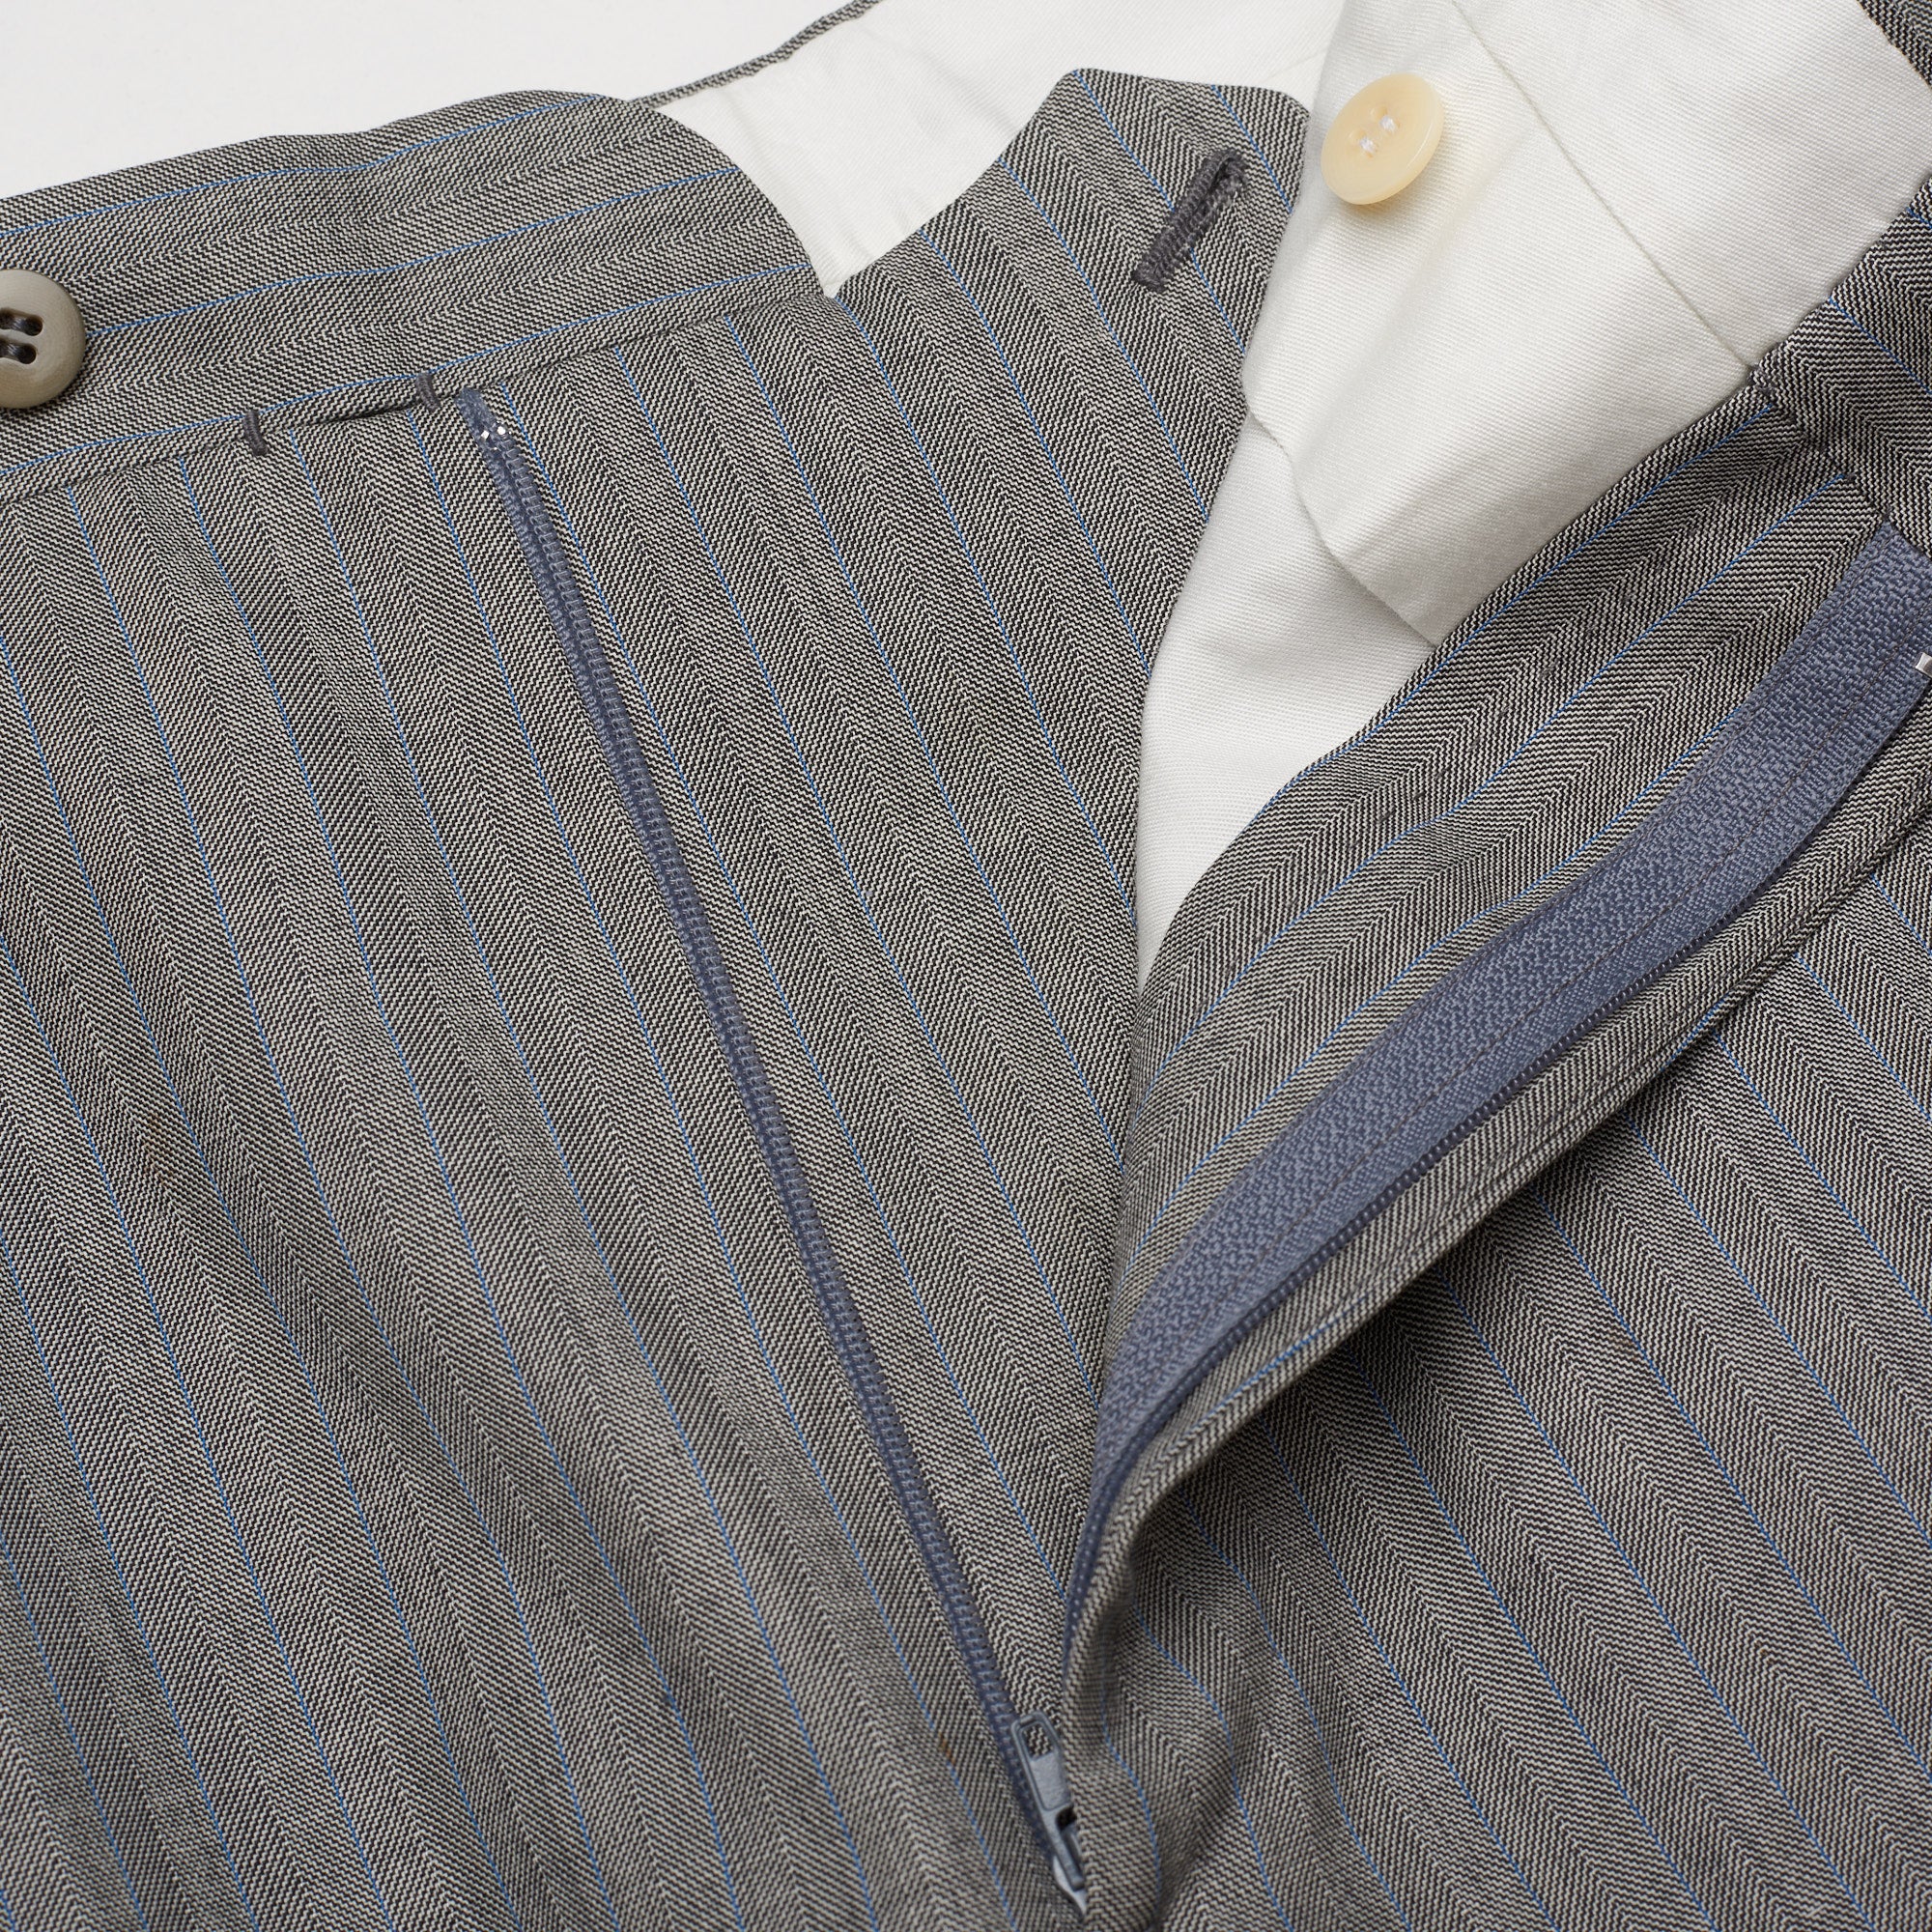 CESARE ATTOLINI Gray Herringbone Striped Wool Super 140's Suit EU 52 US 42 CESARE ATTOLINI